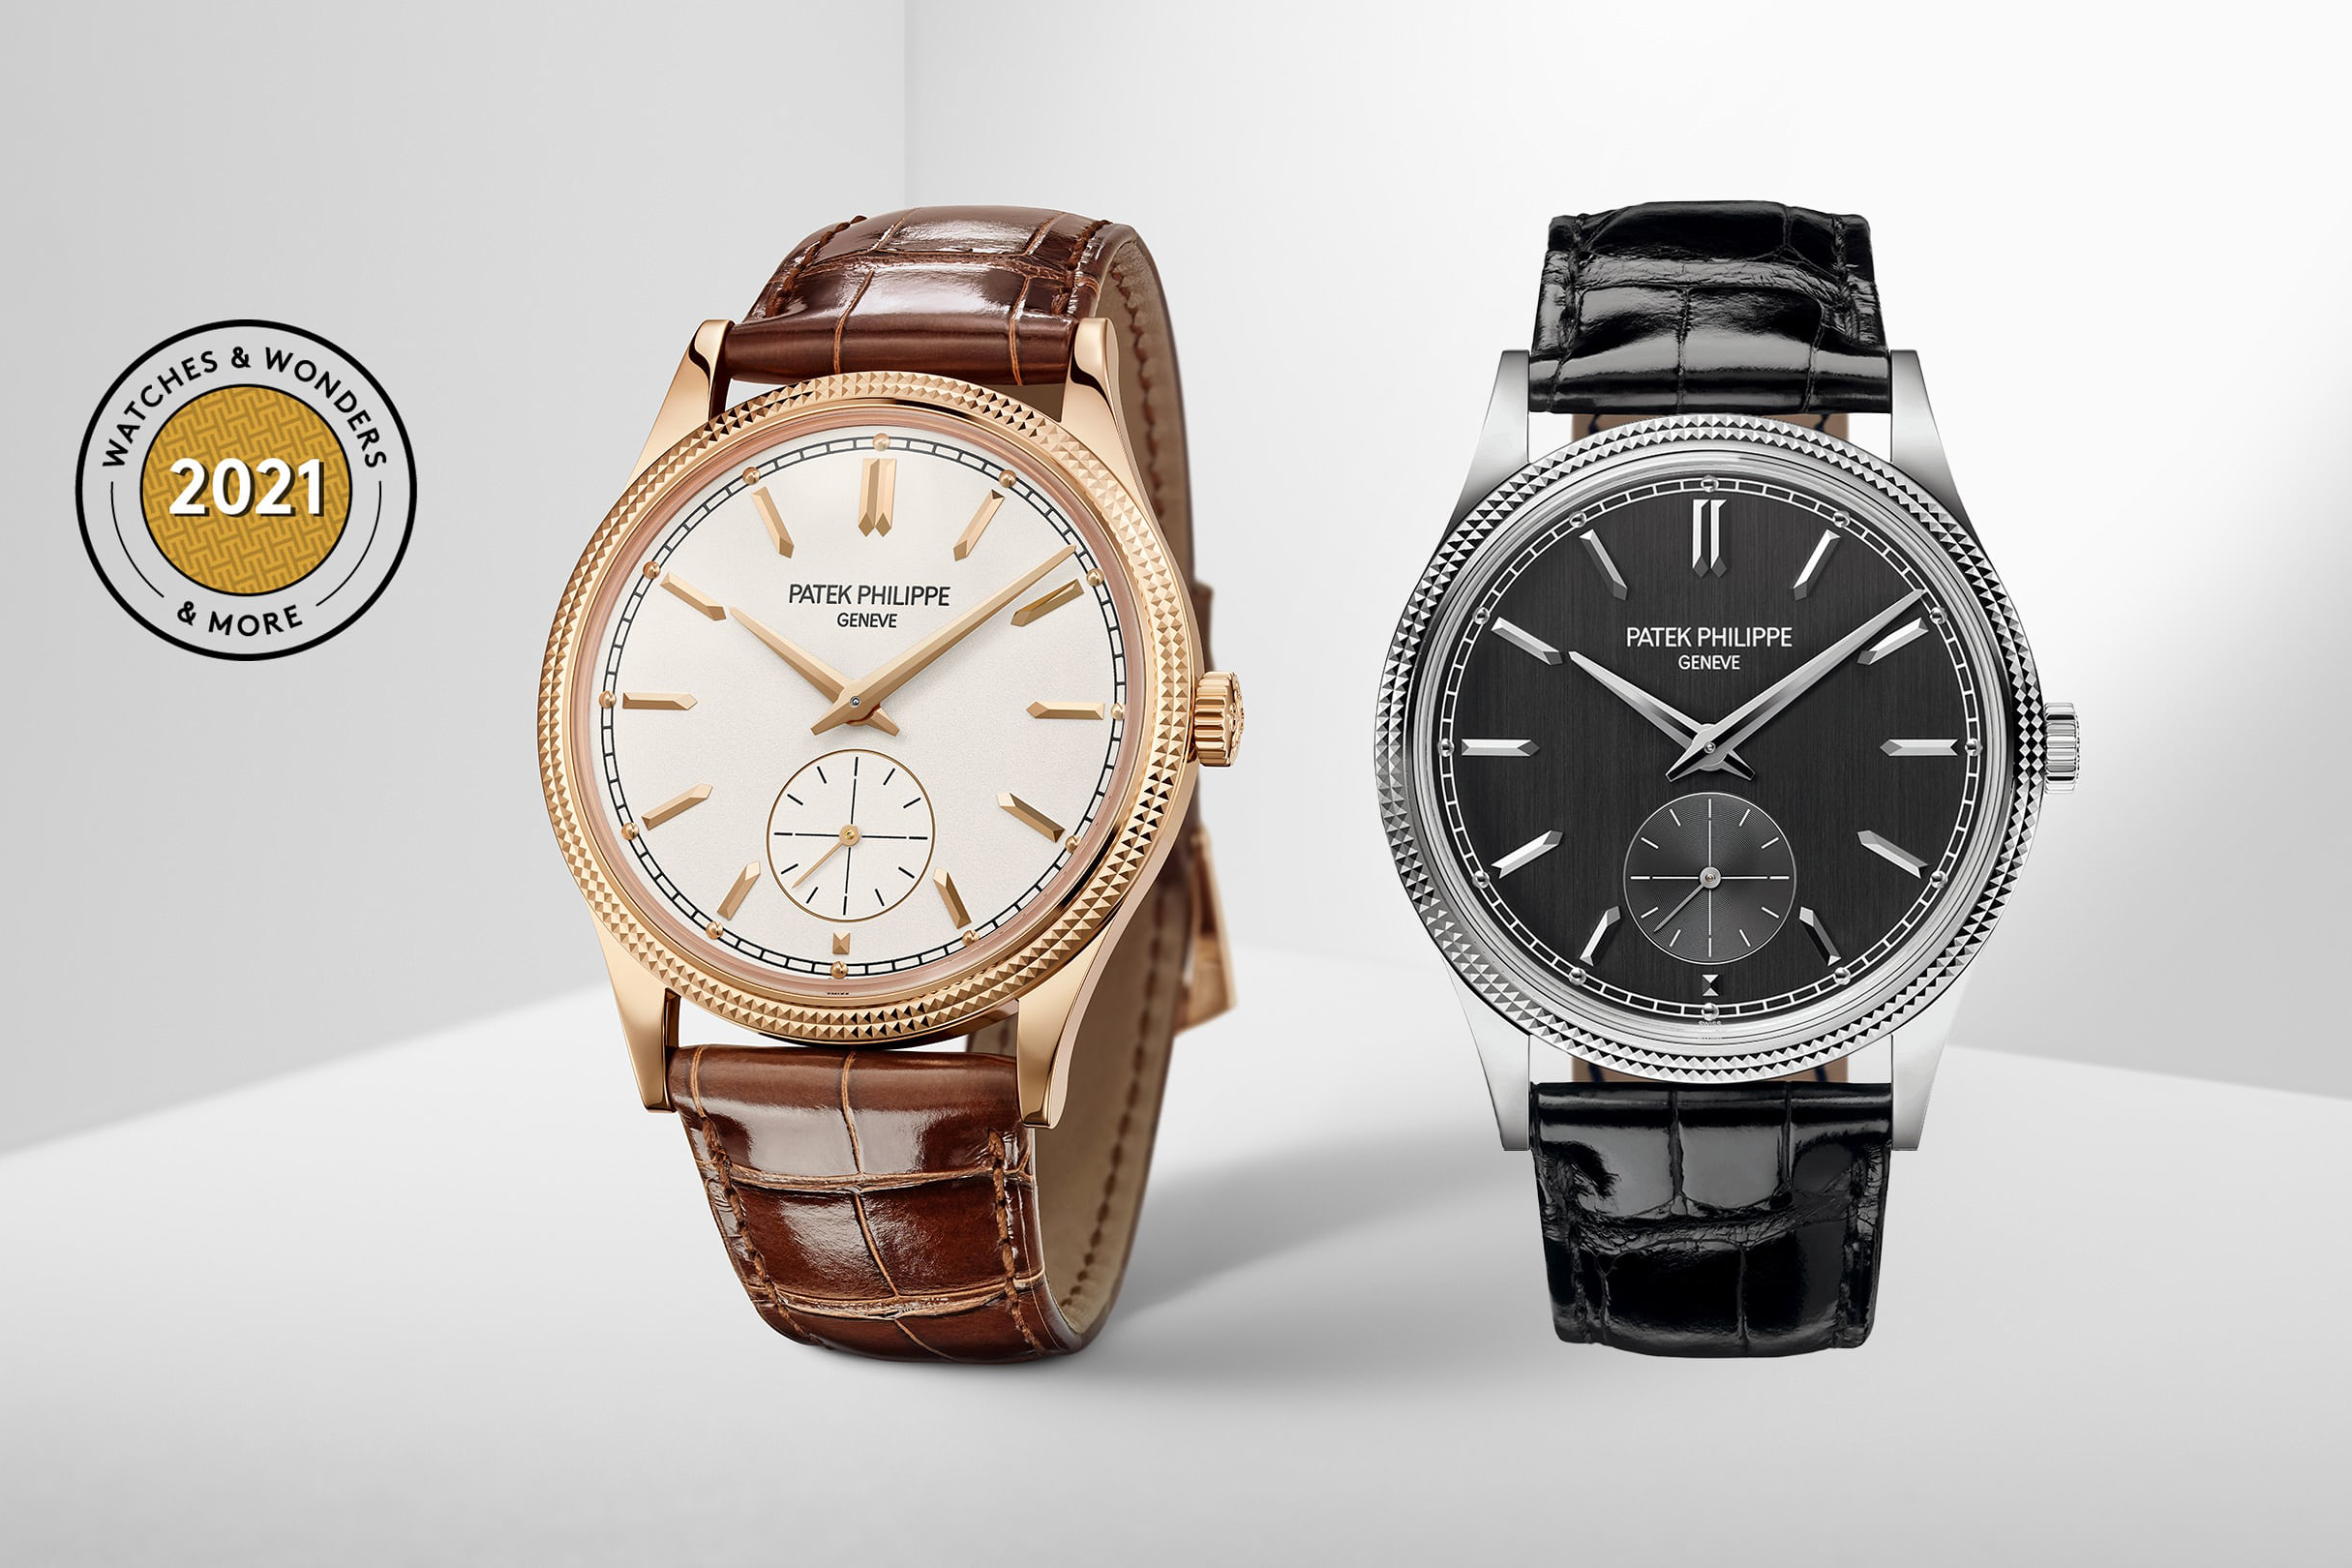 Patek Philippe tiếp tục khuấy đảo Watches and Wonders 2021 với 5 mẫu đồng hồ mới